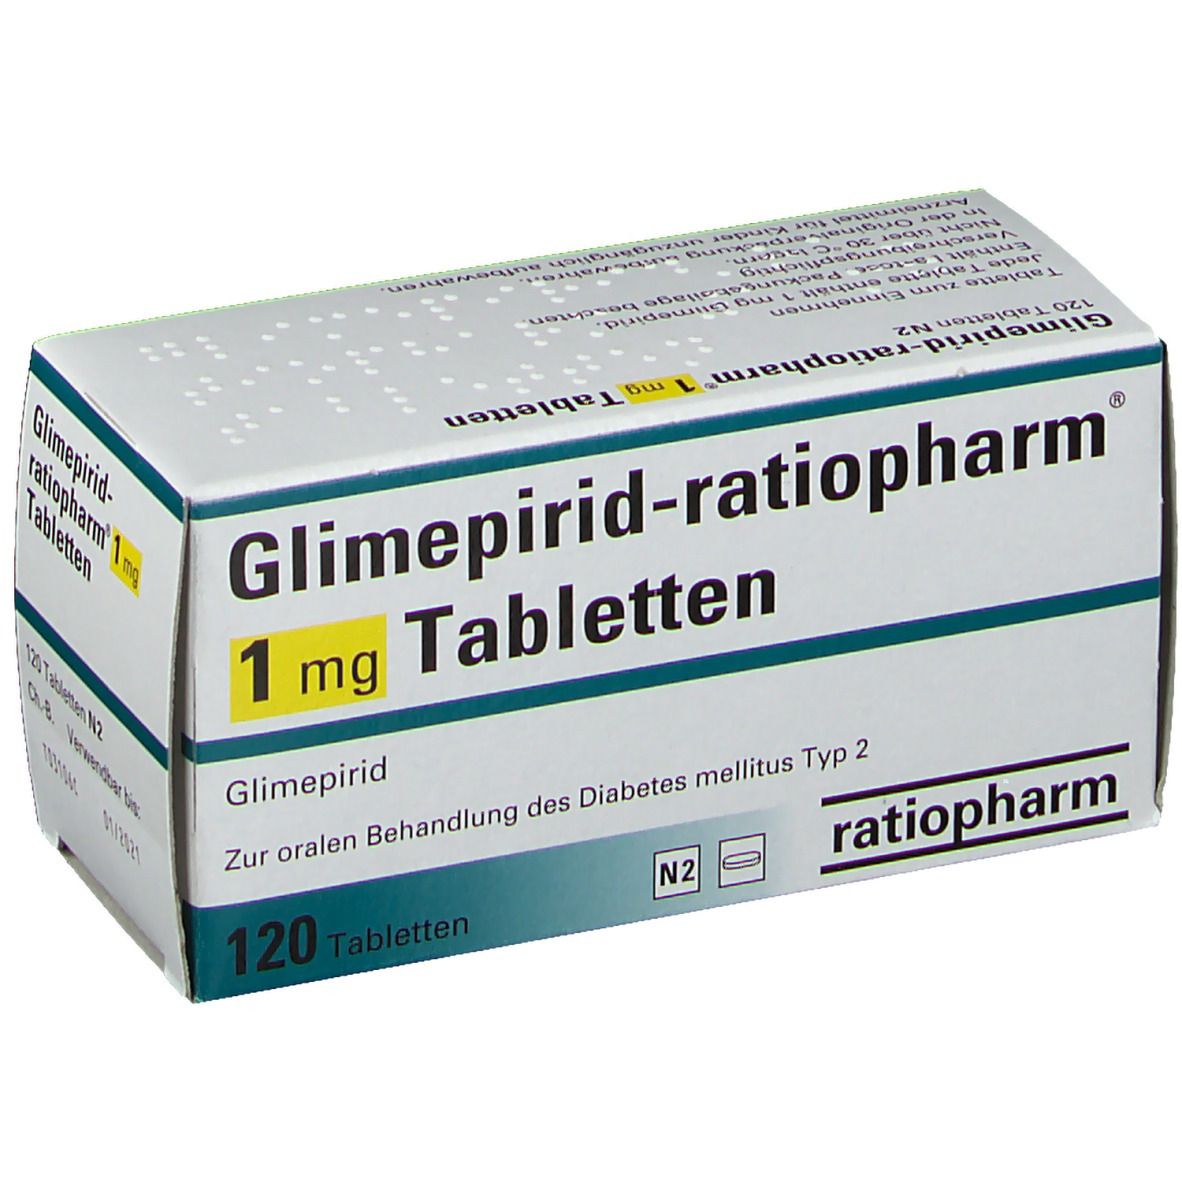 Glimepirid-ratiopharm® 1 mg